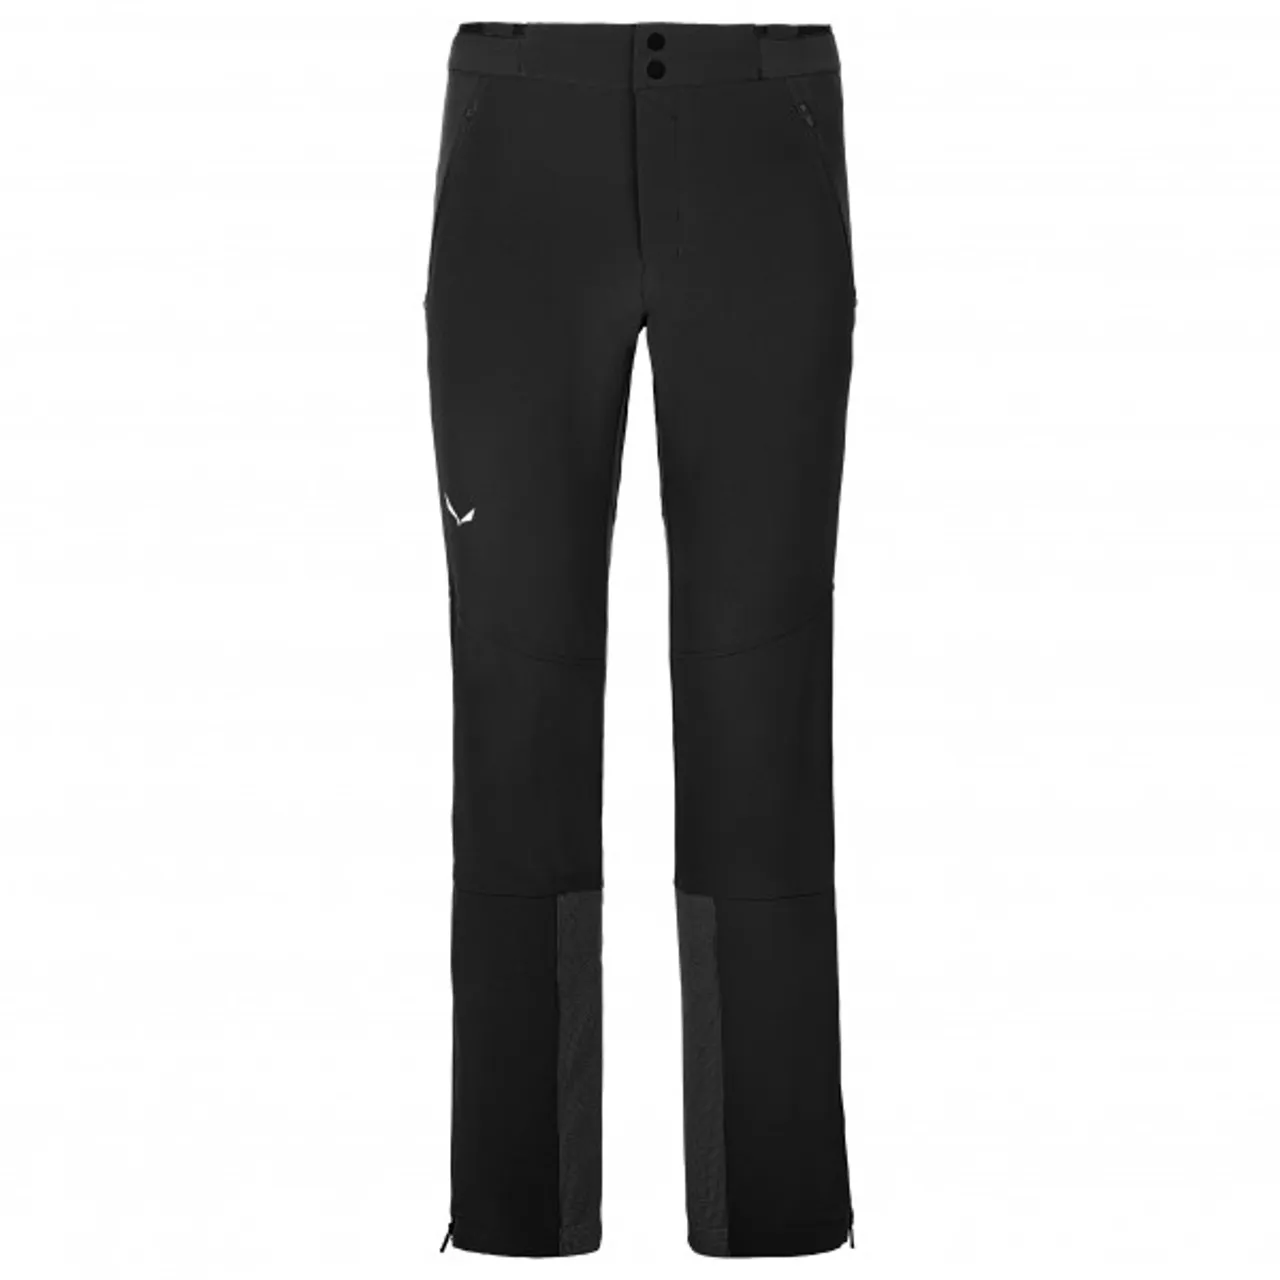 Salewa - Lagorai Pant - Mountaineering trousers